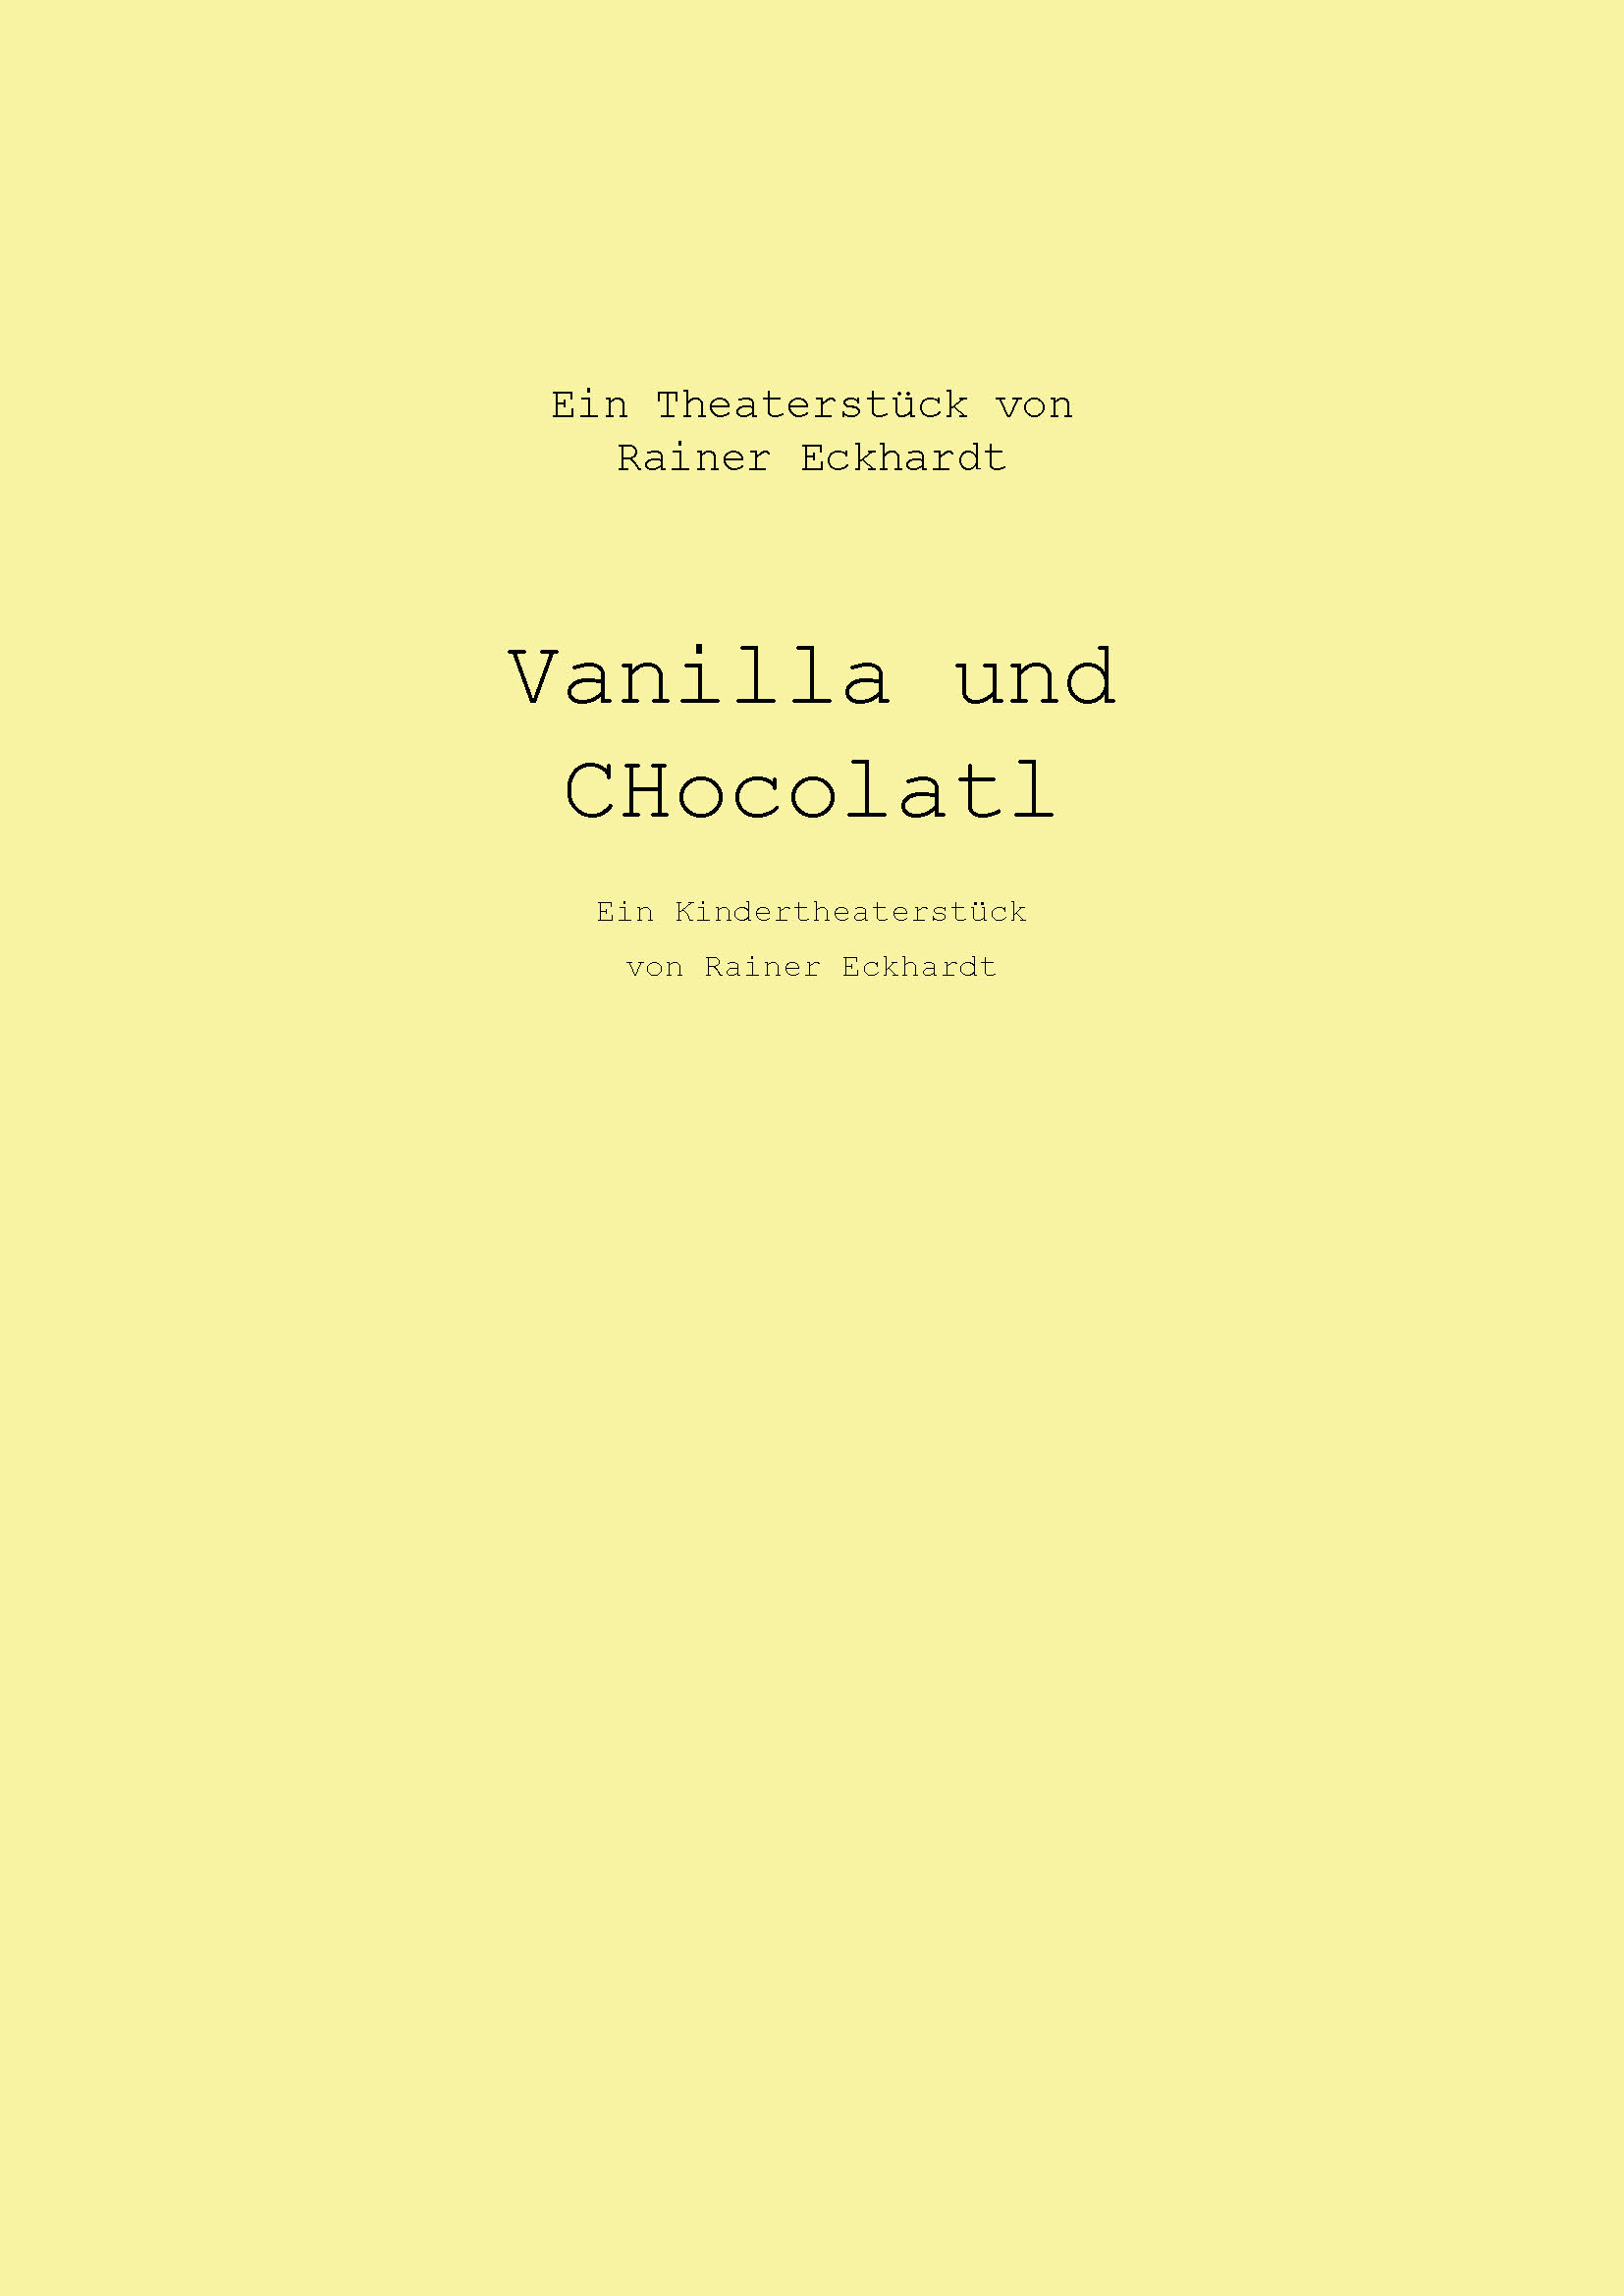 Vanilla und Chocolatl